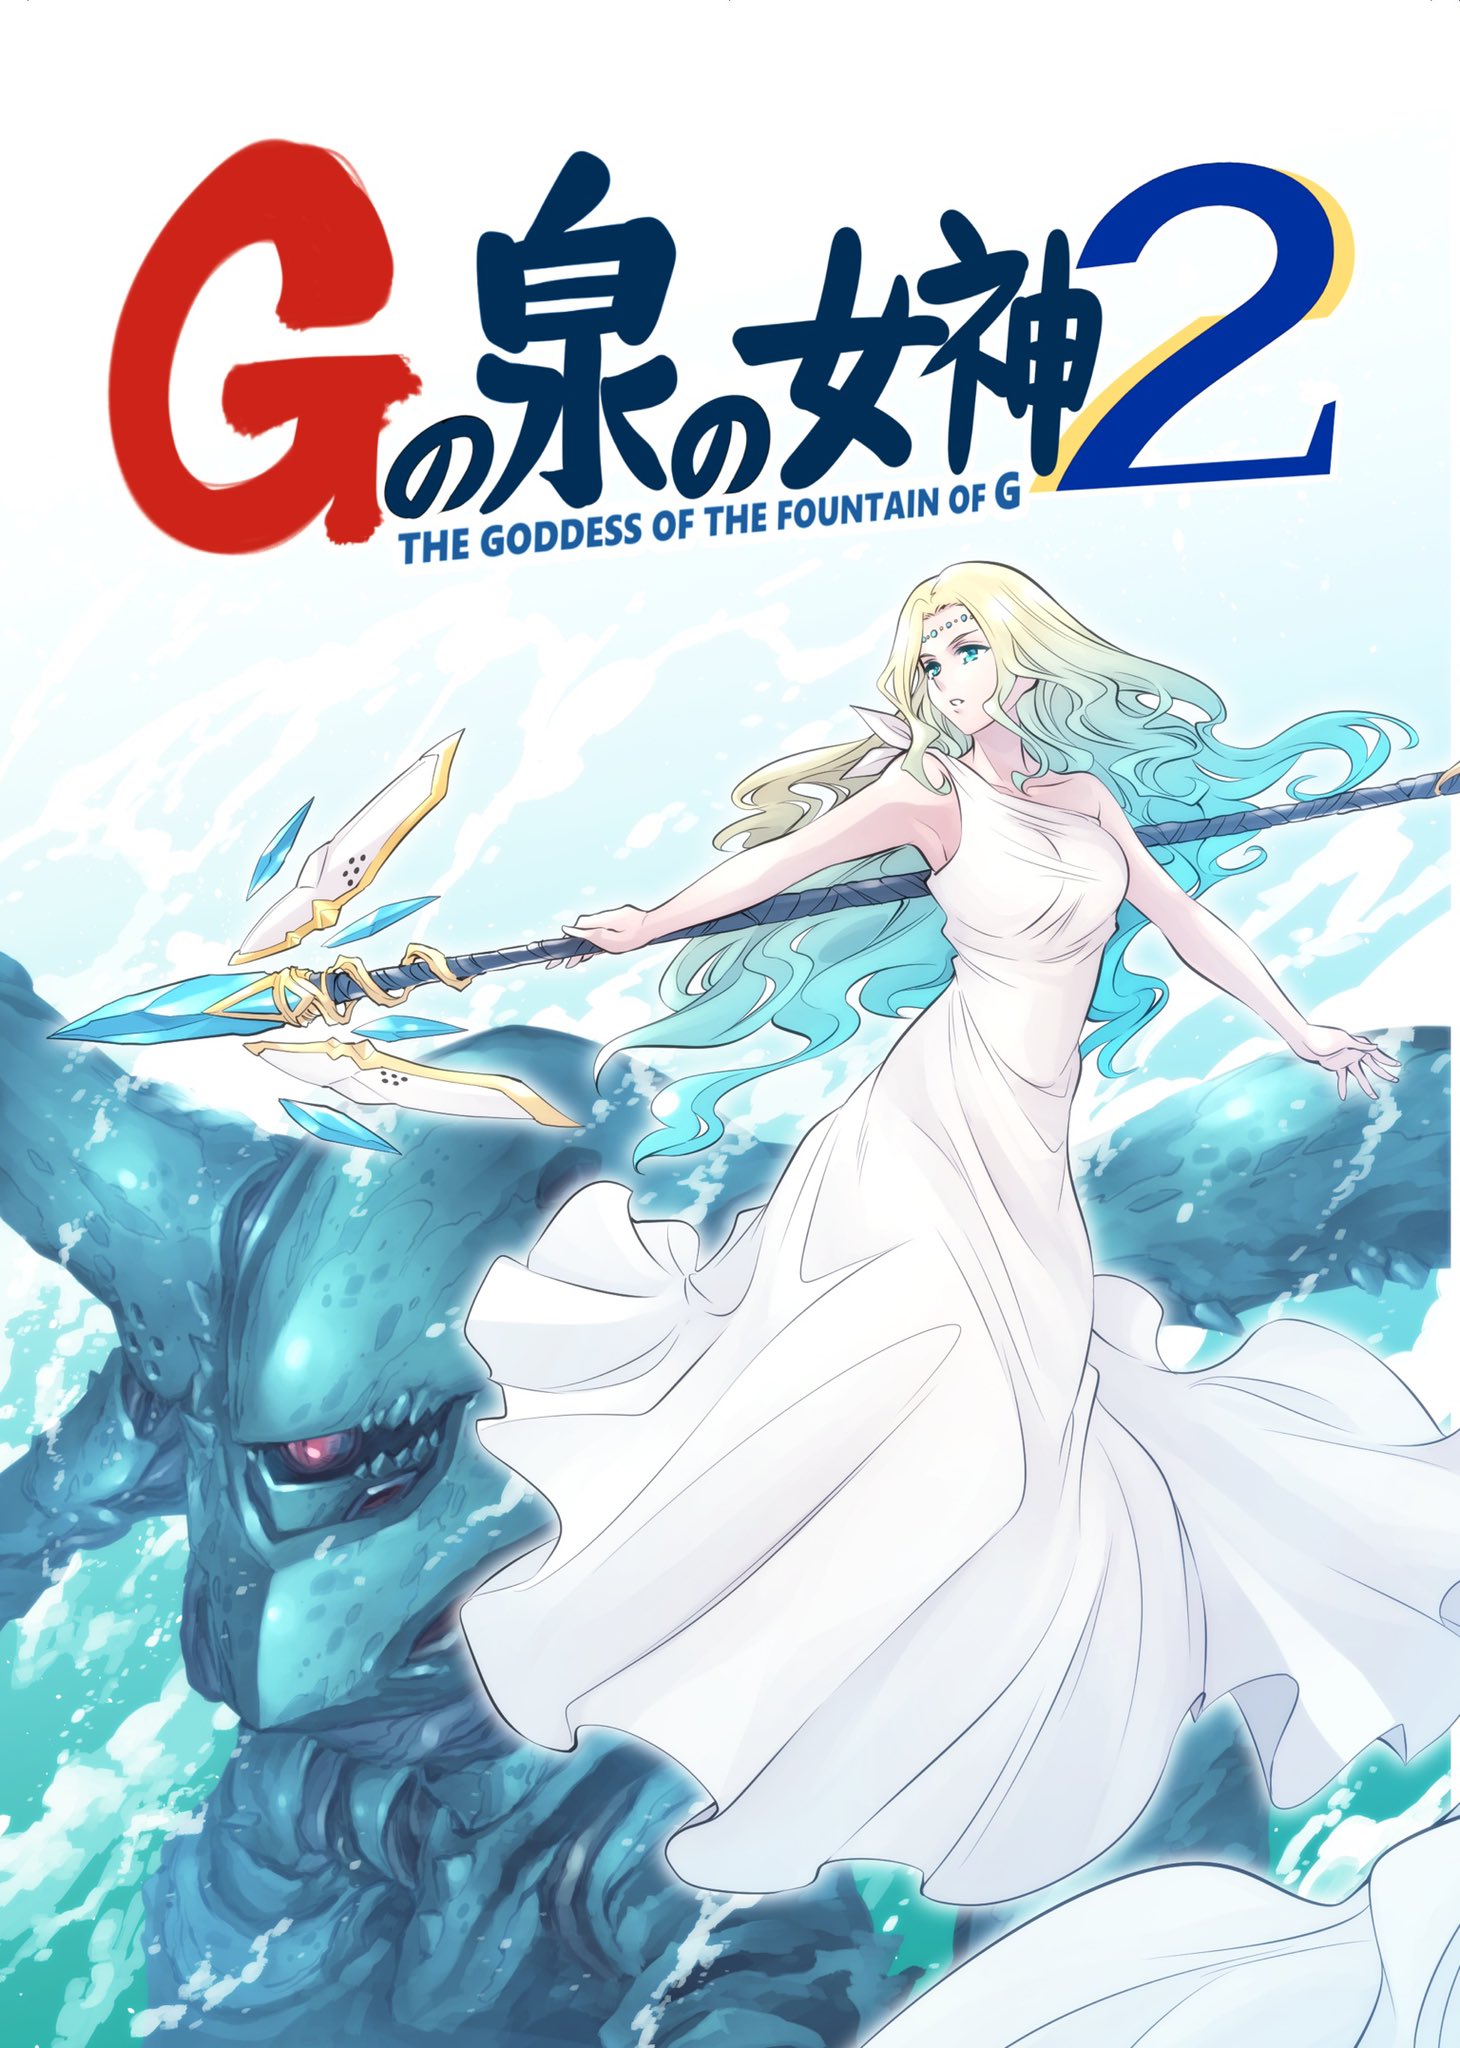 The Goddess of the Fountain of G manga